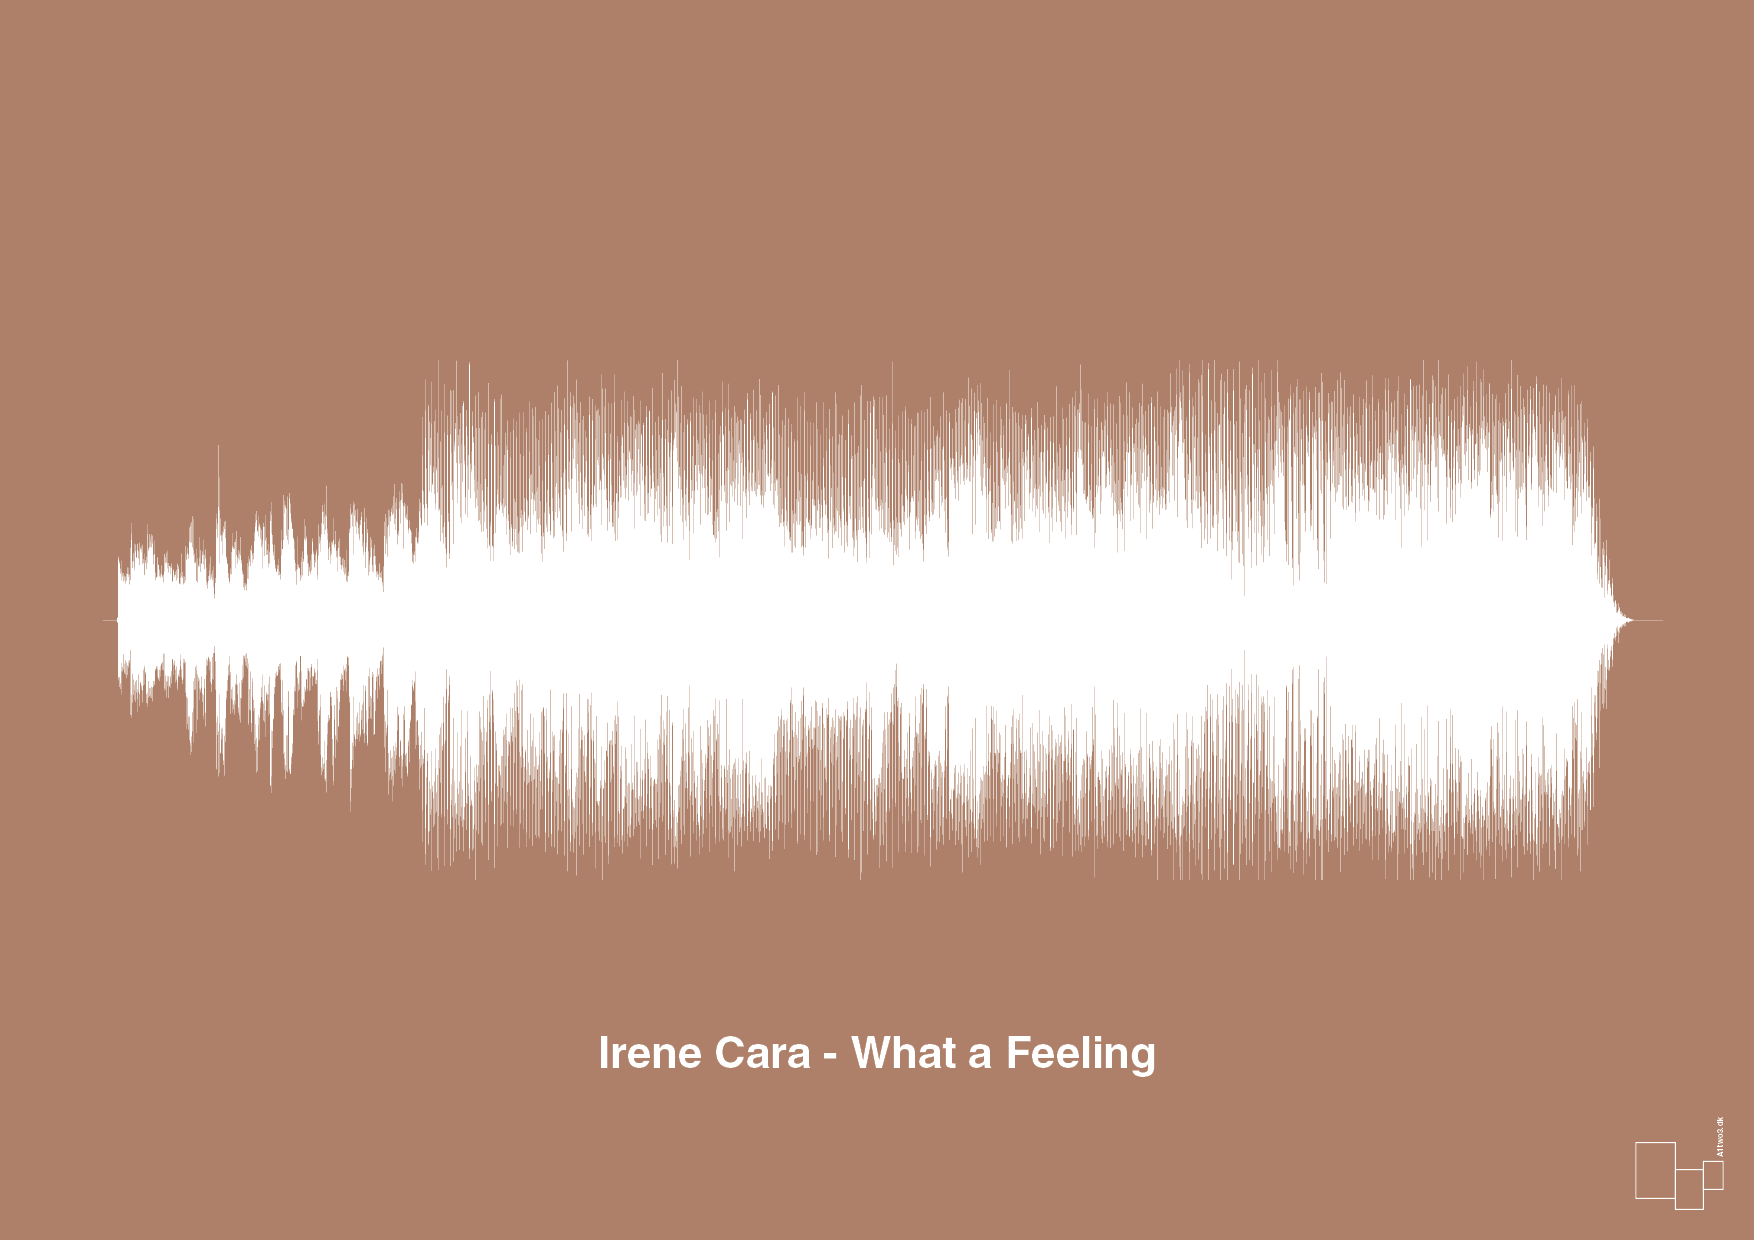 irene cara - what a feeling - Plakat med Musik i Cider Spice